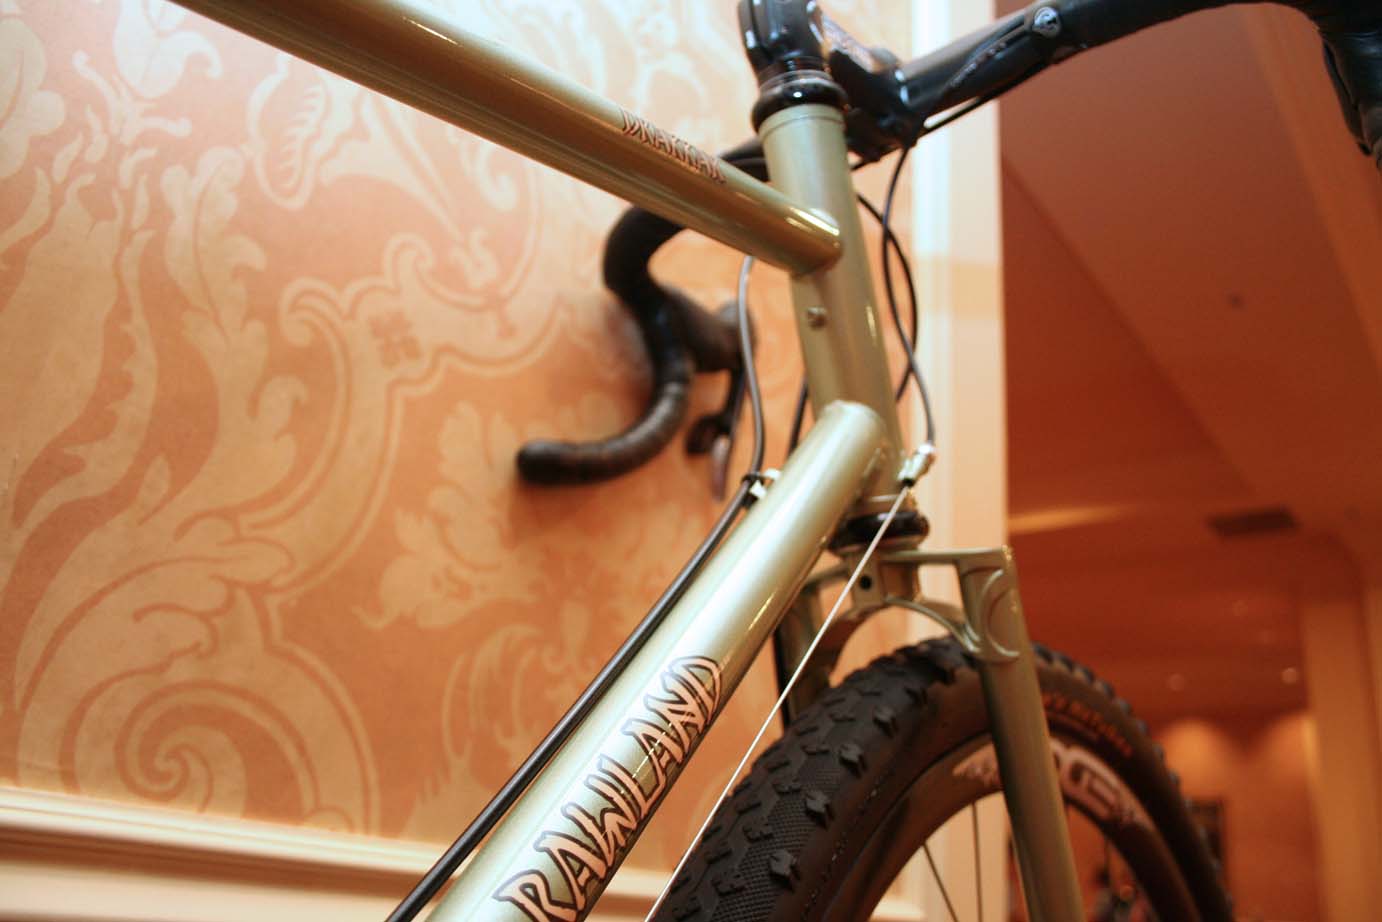 Rawlands Drakkar Cyclocross / Adventure Bike / Monster Cross